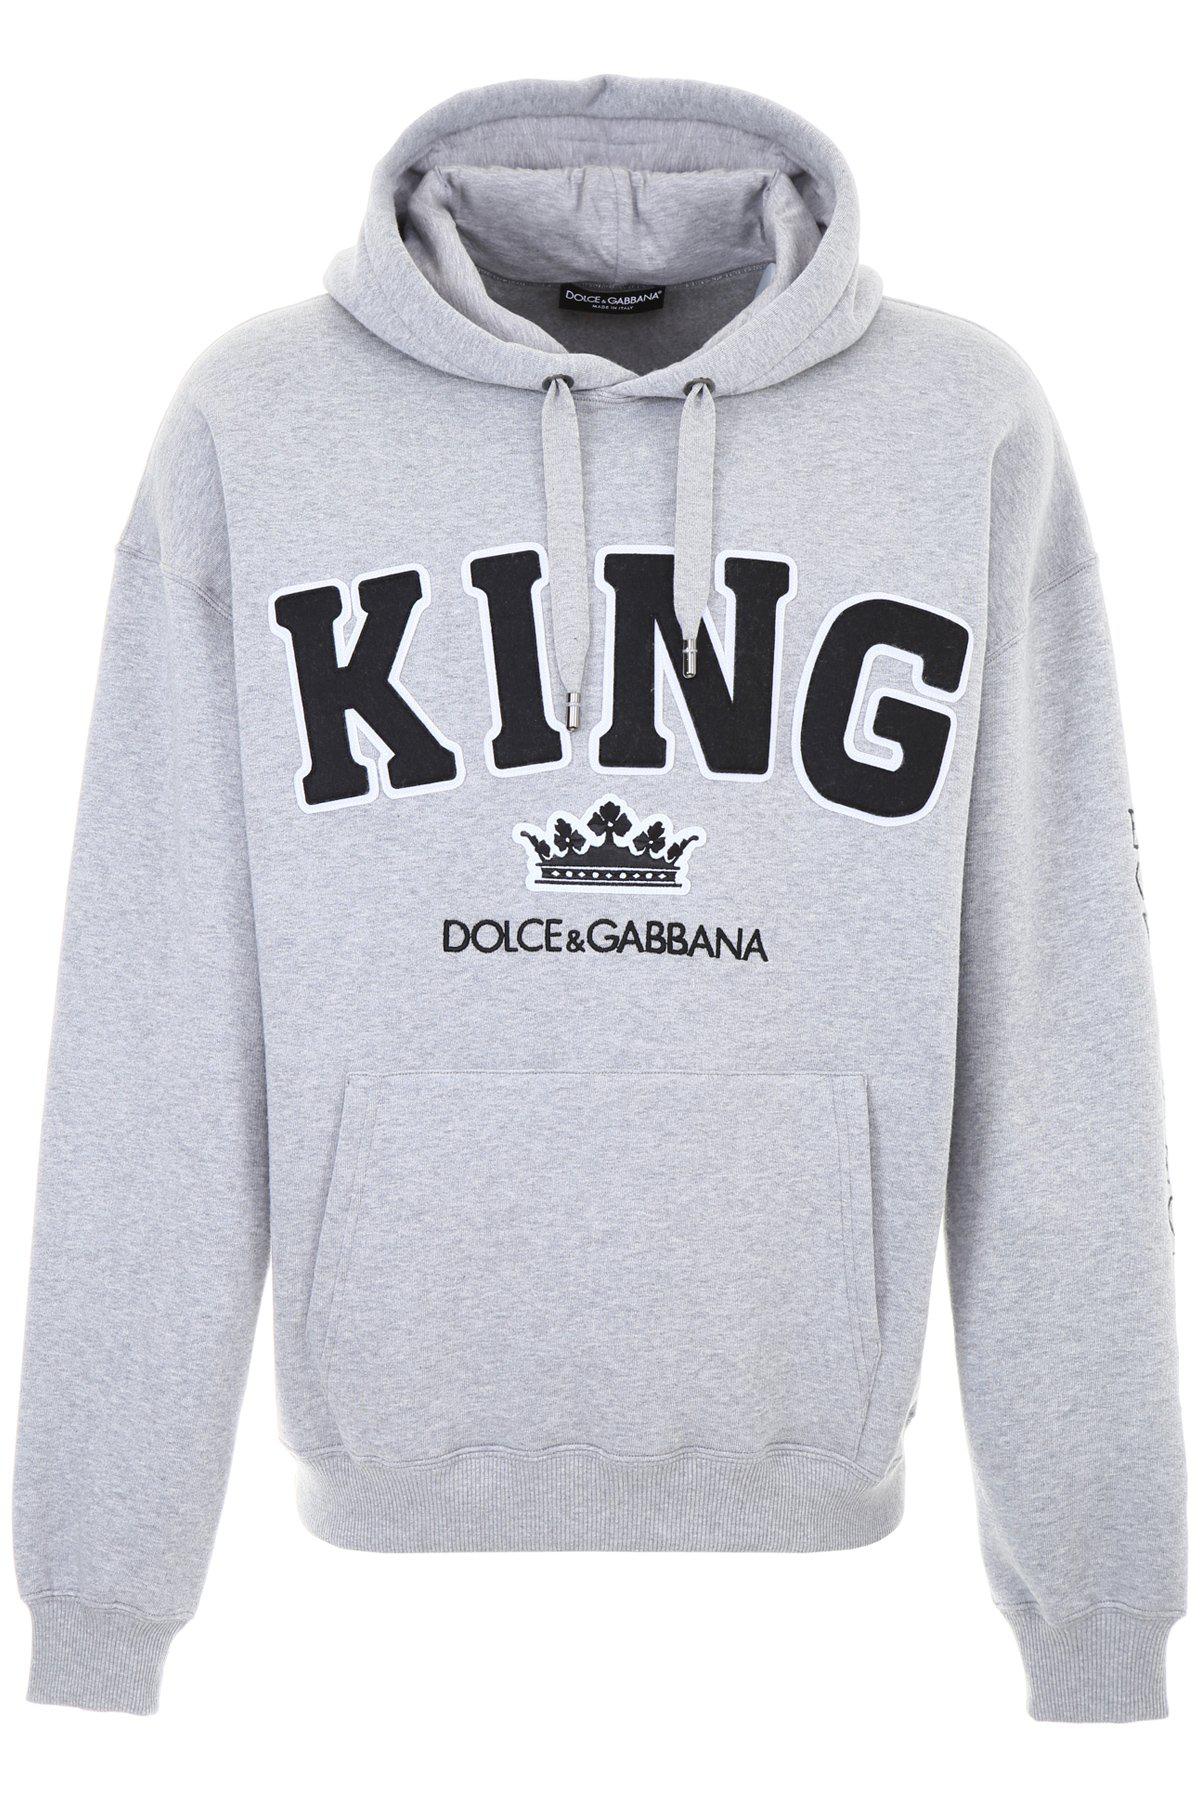 Dolce & Gabbana King Hoodie in Gray for Men | Lyst